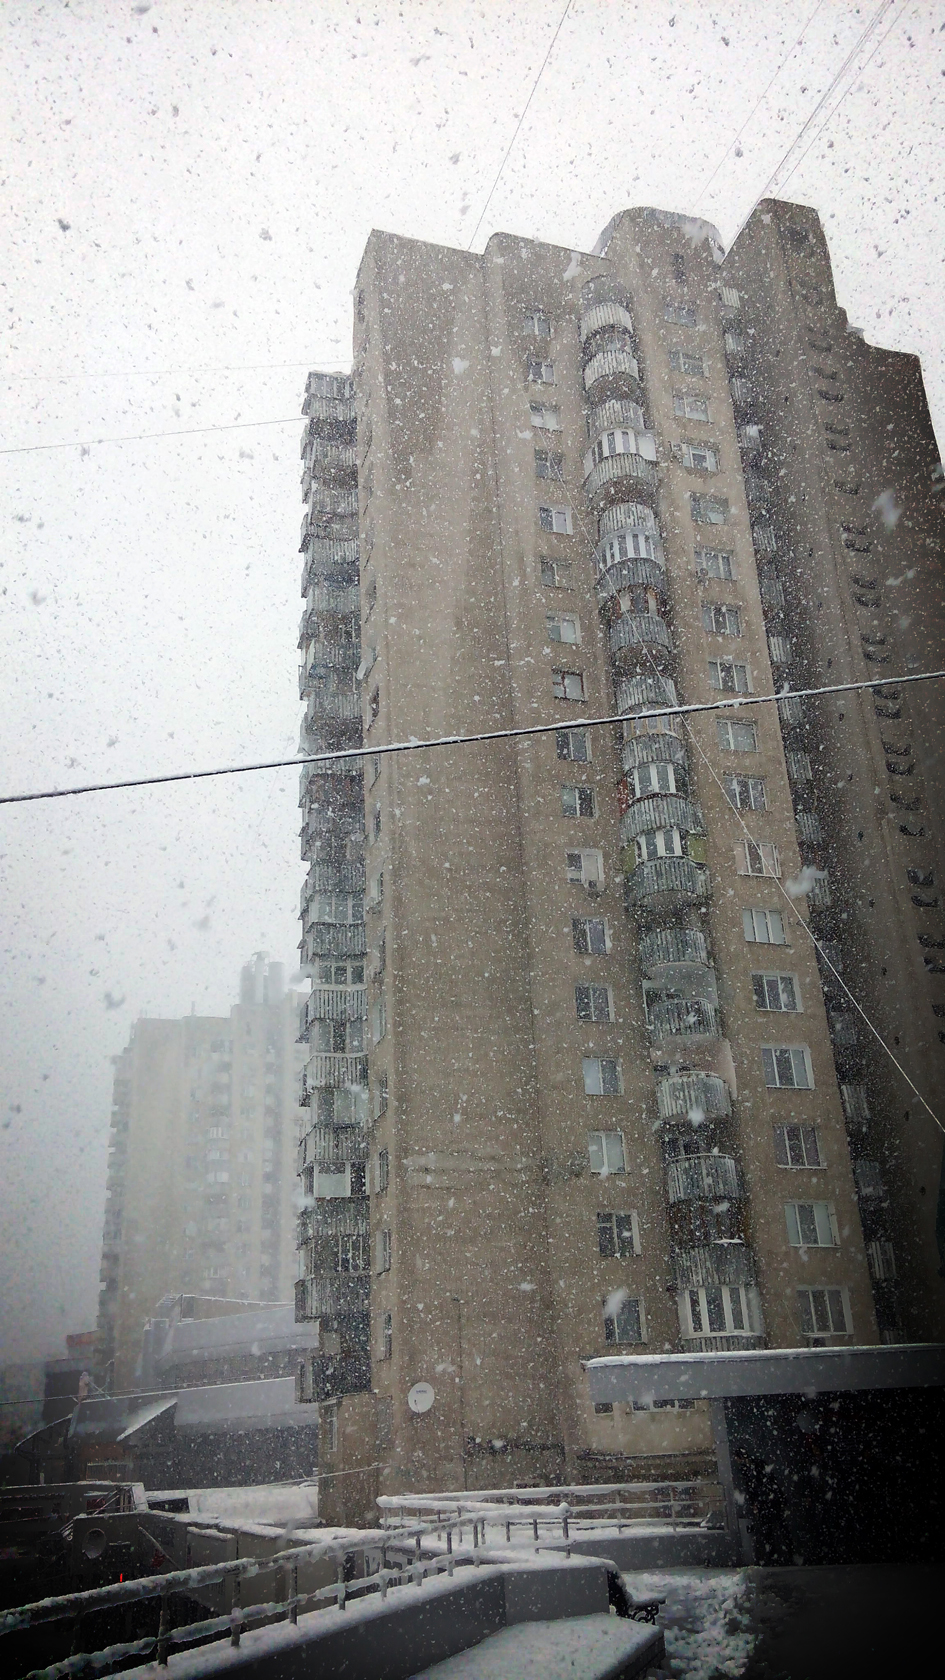 april snow in chisinau (17)